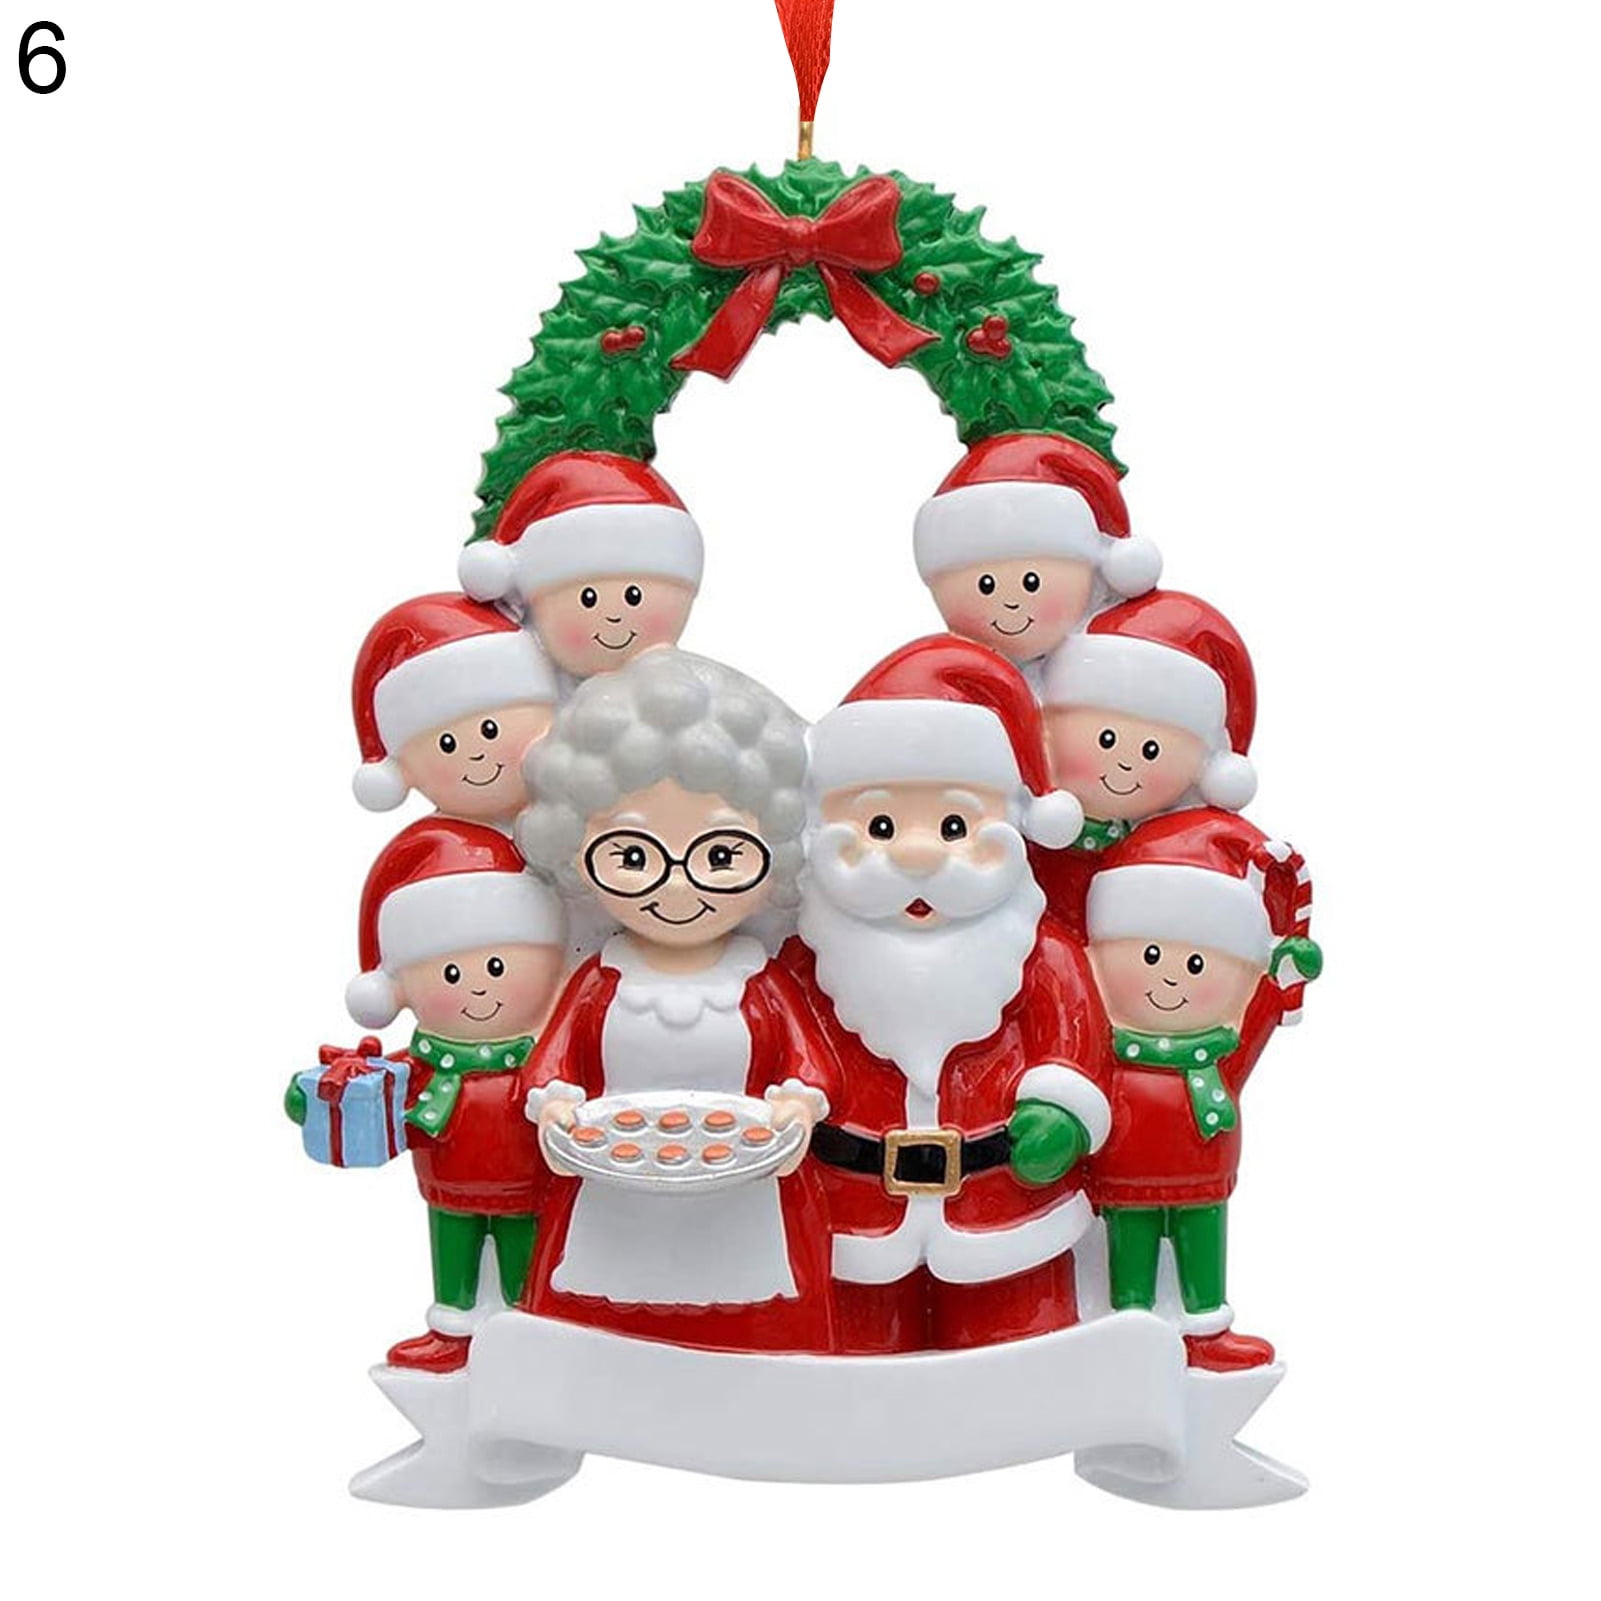 Details about   Christmas decorations Figurines Holiday Hatz Elf Santa Snowman miniatures 